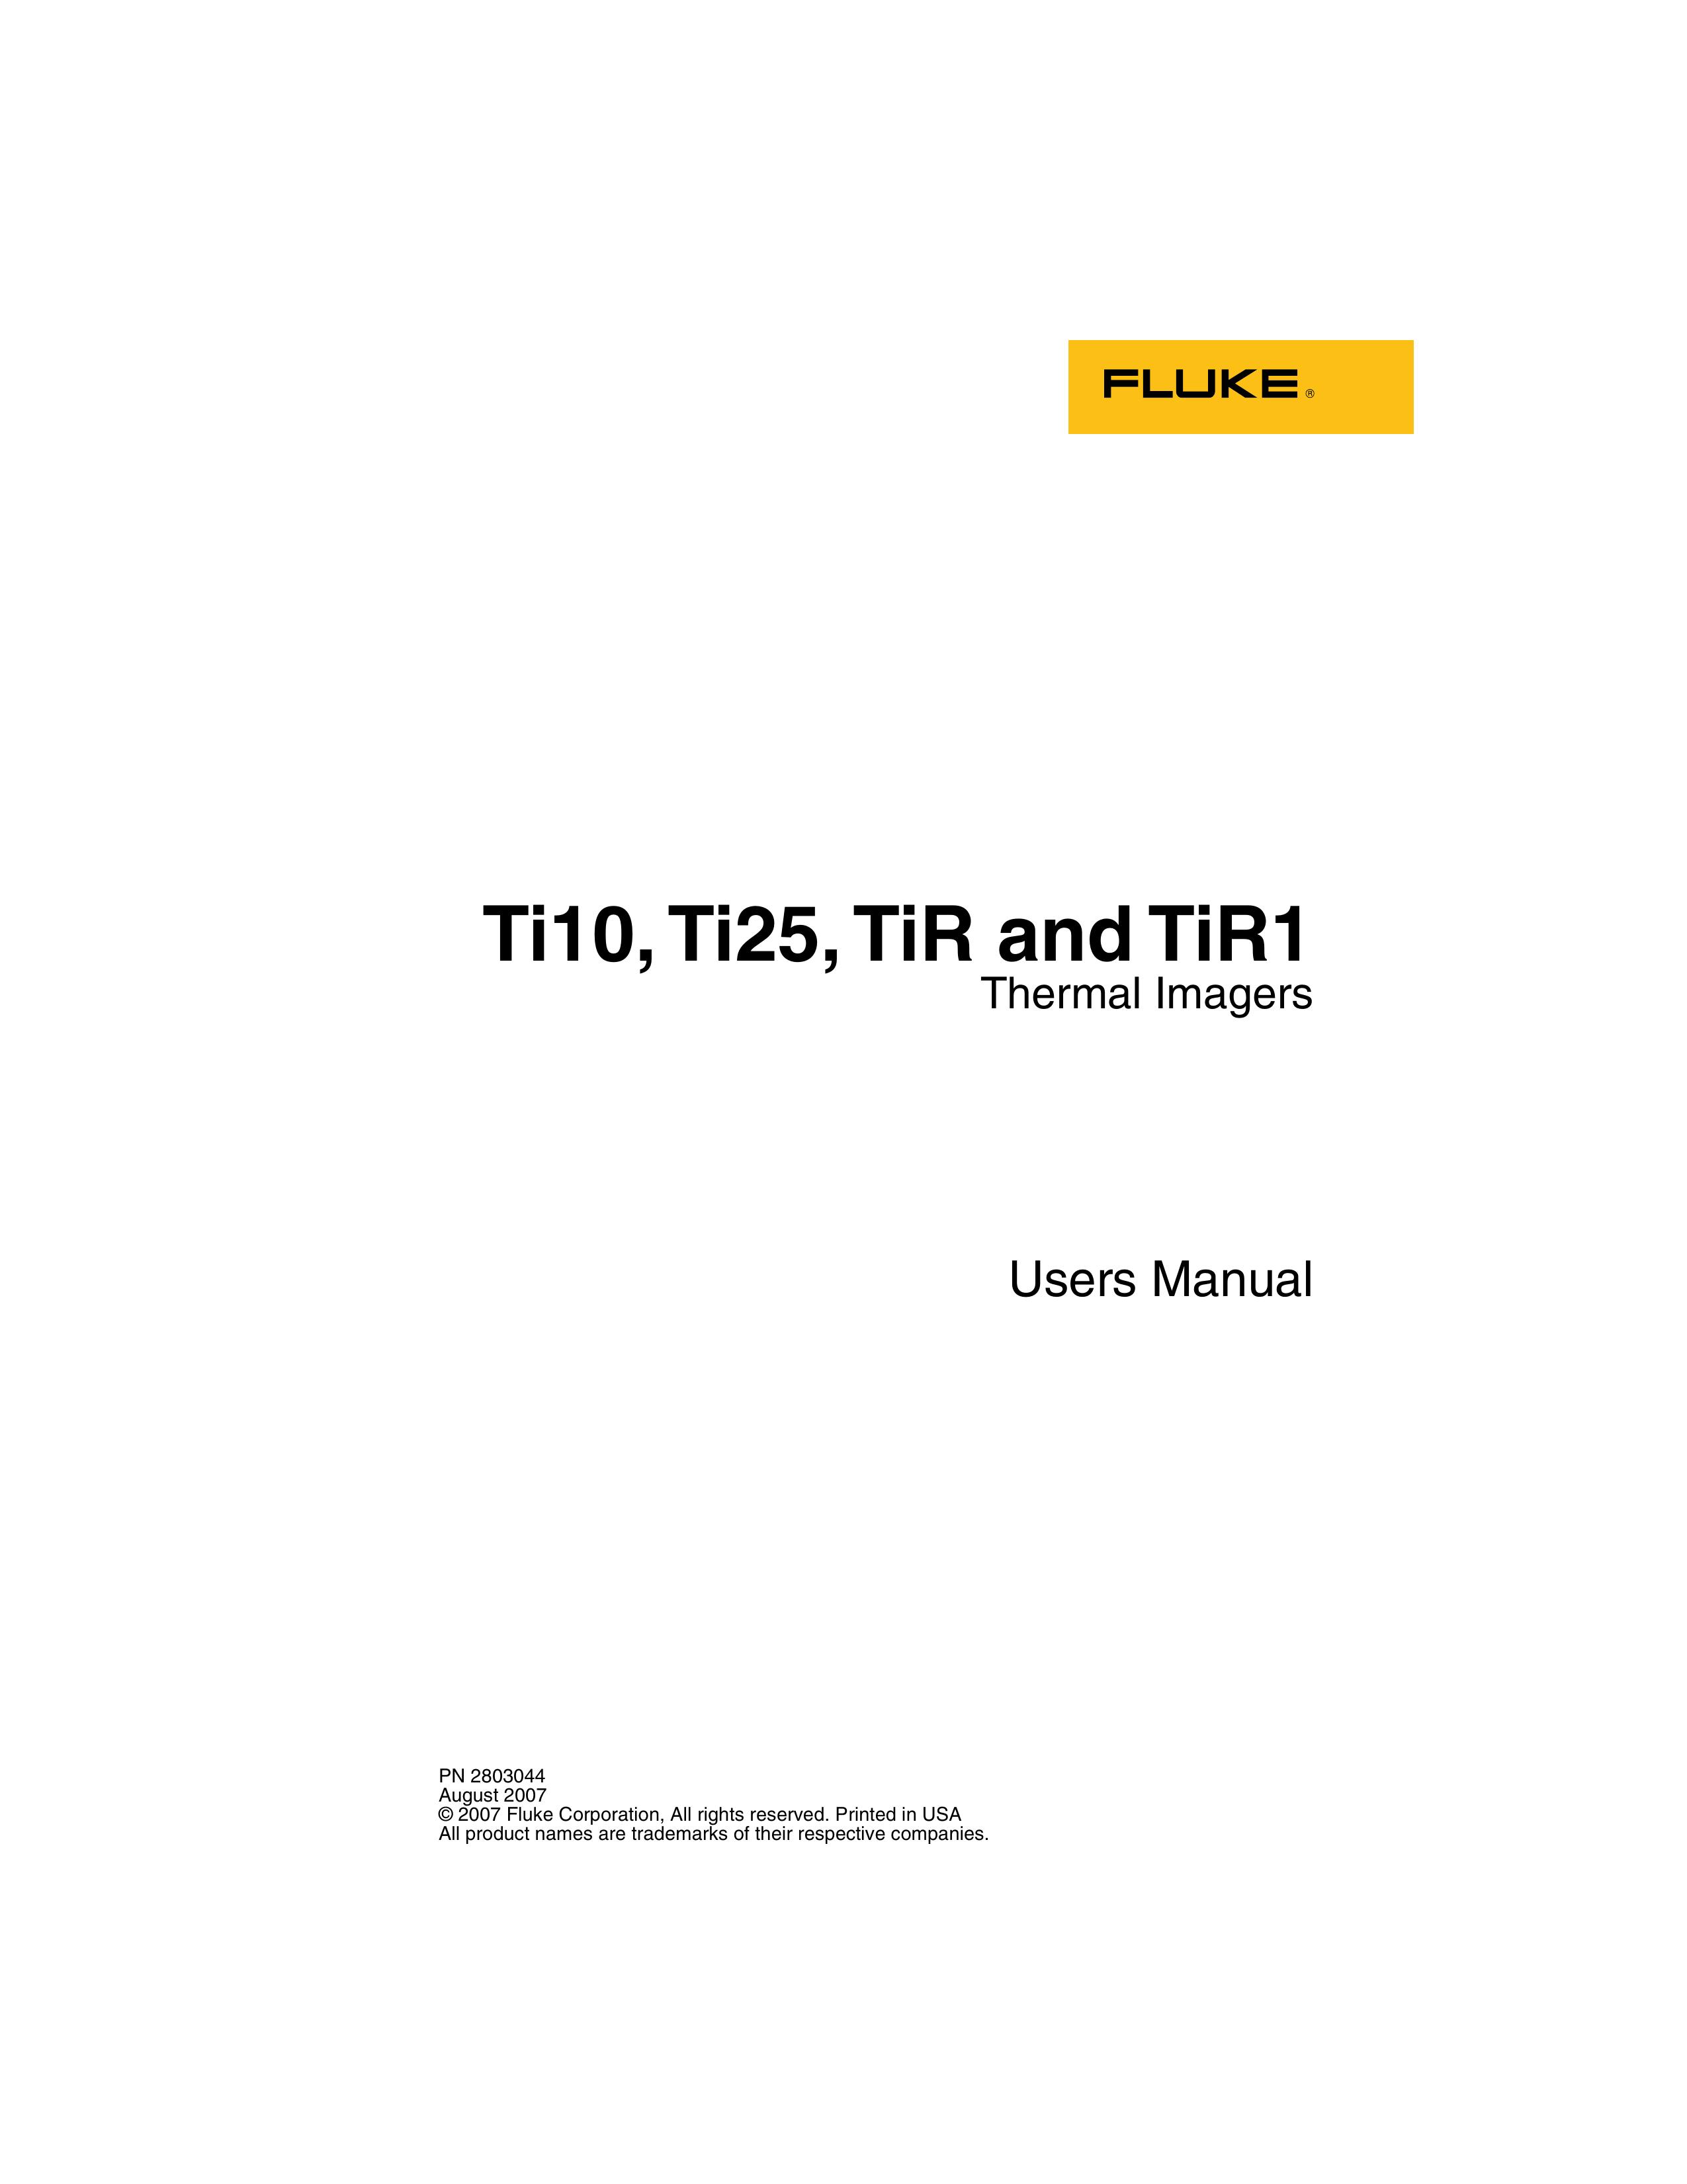 Fluke TiR Digital Camera User Manual